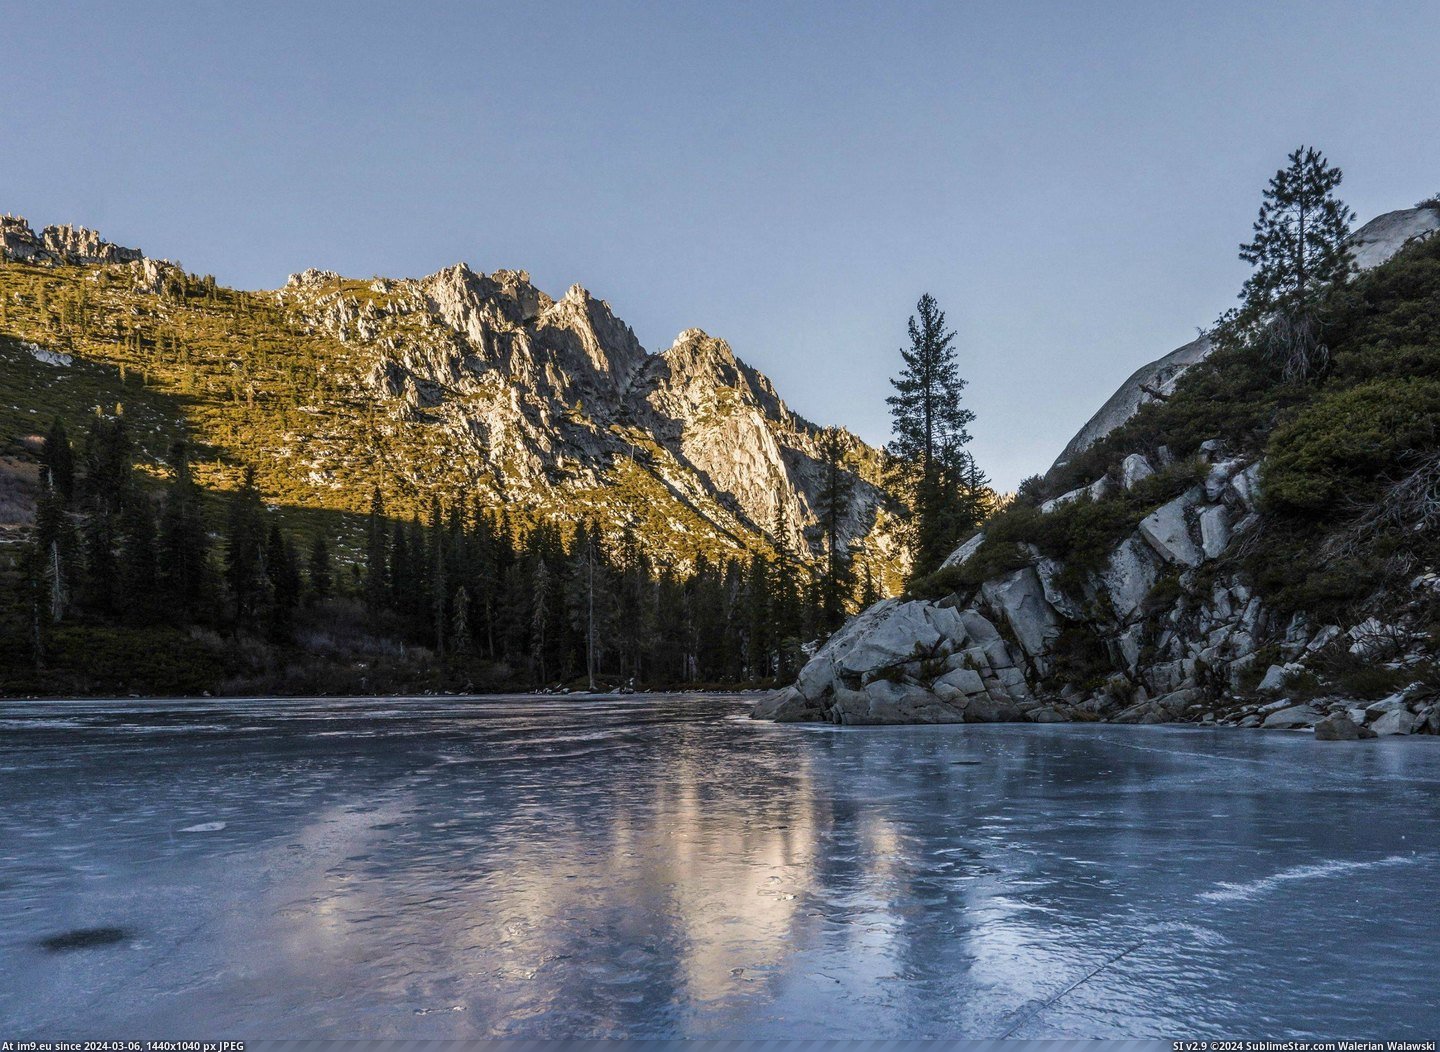 #Big #Lake #California #Northern #Alps #Trinity #Solstice #Winter #Bear #Frozen [Earthporn] Winter Solstice at Frozen Big Bear Lake in the Trinity Alps of Northern California. [OC] [2700 x 1962] Pic. (Изображение из альбом My r/EARTHPORN favs))